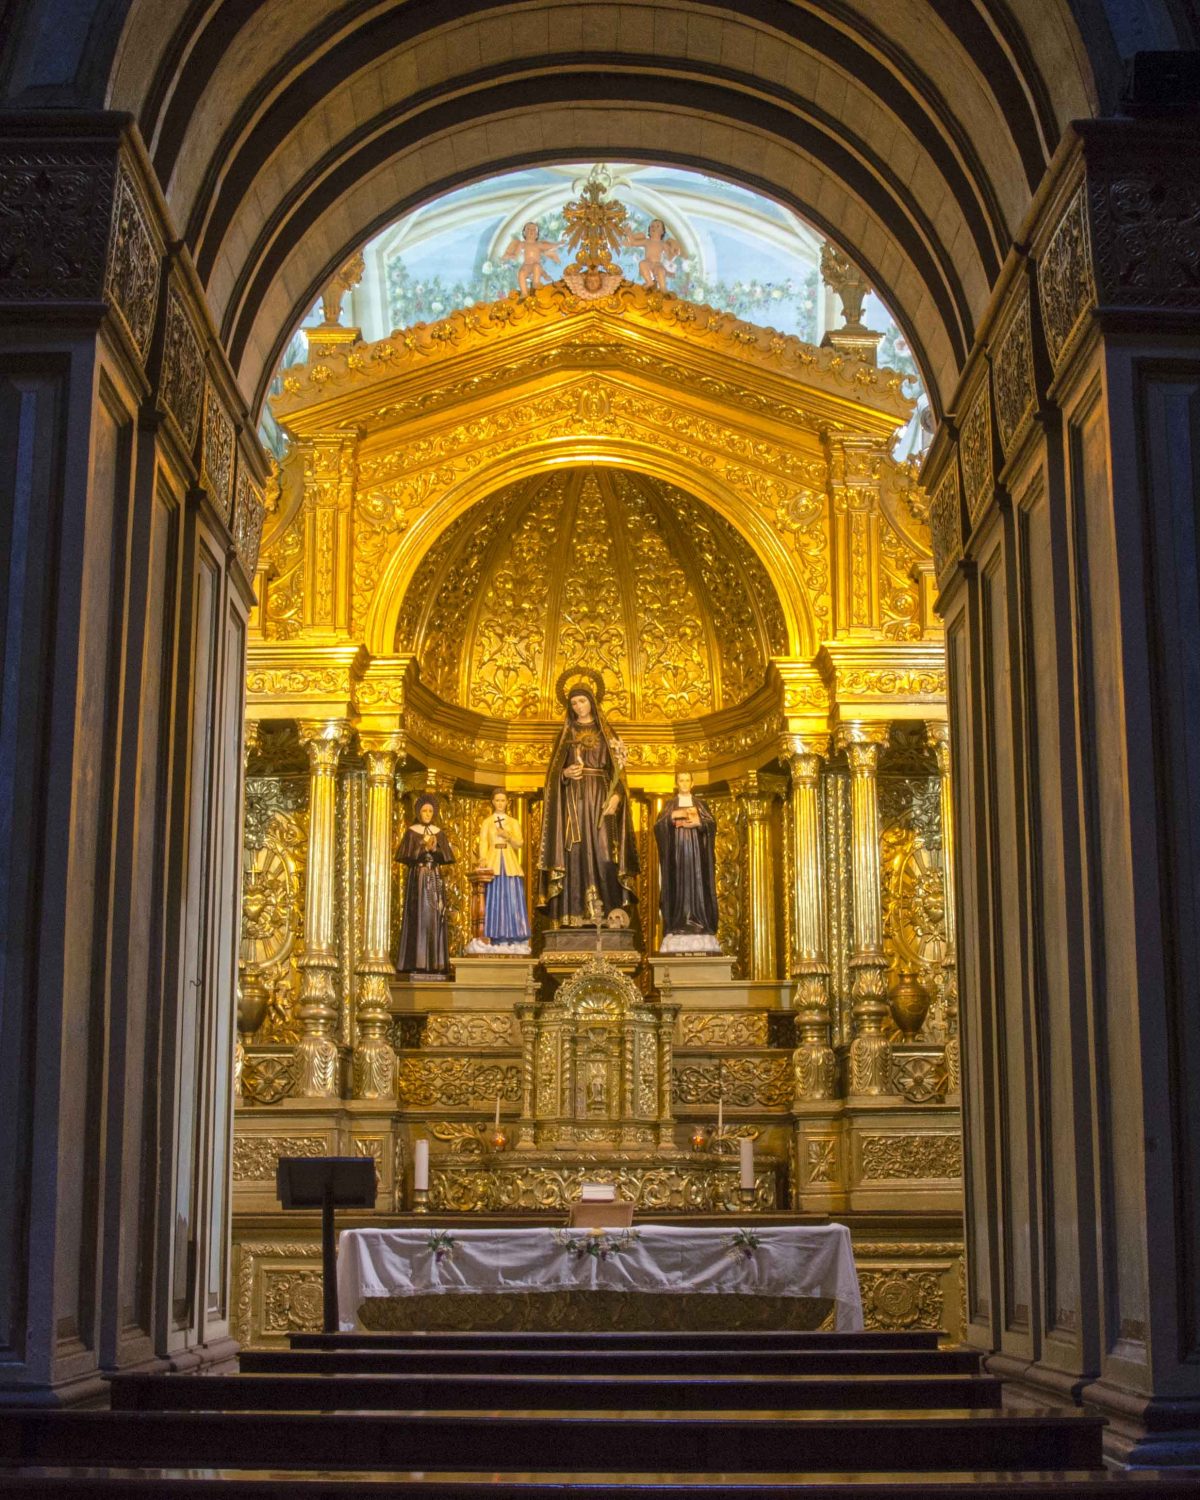 Capilla lateral bañada en oro con estatua central de la Virgen María